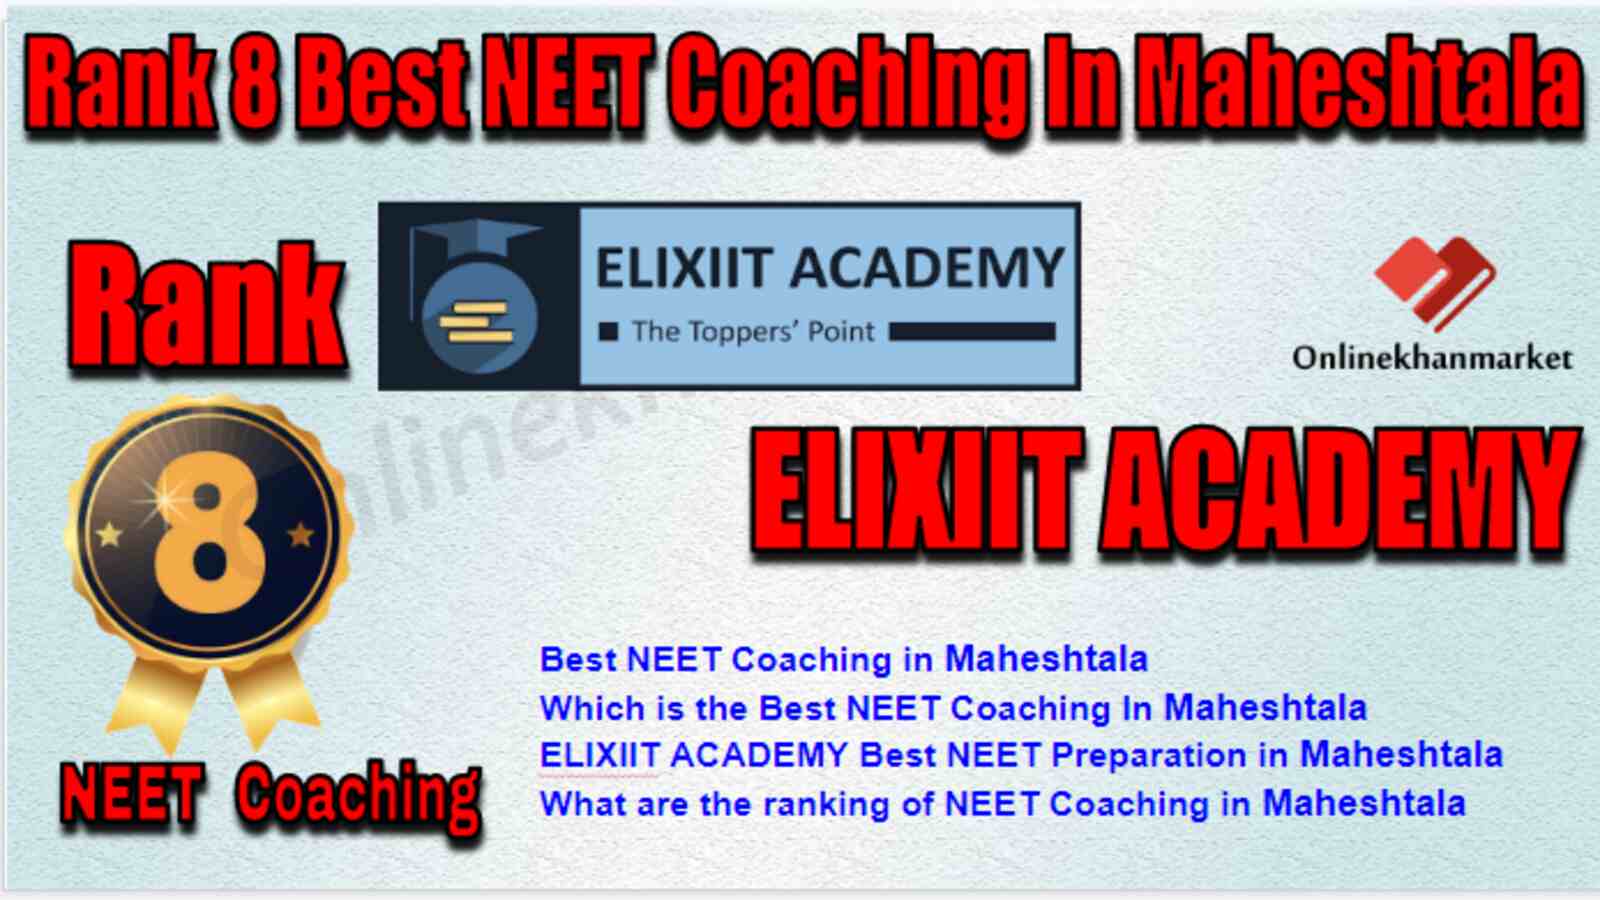 Rank 8 Best NEET Coaching in Maheshtala